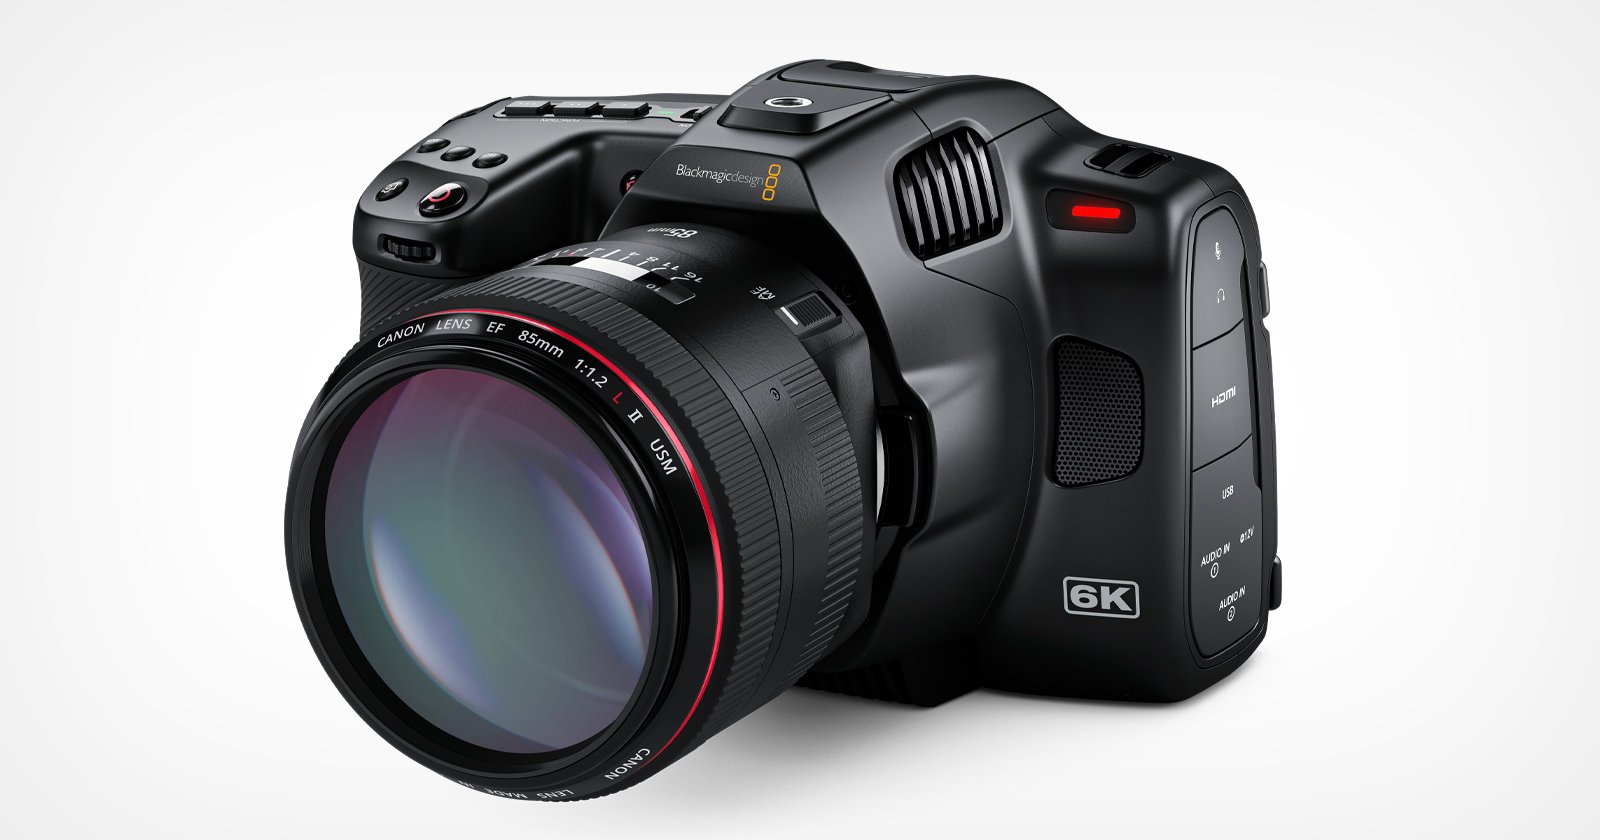 Blackmagic reveals the “most powerful” Pocket Cinema 6K Pro camera